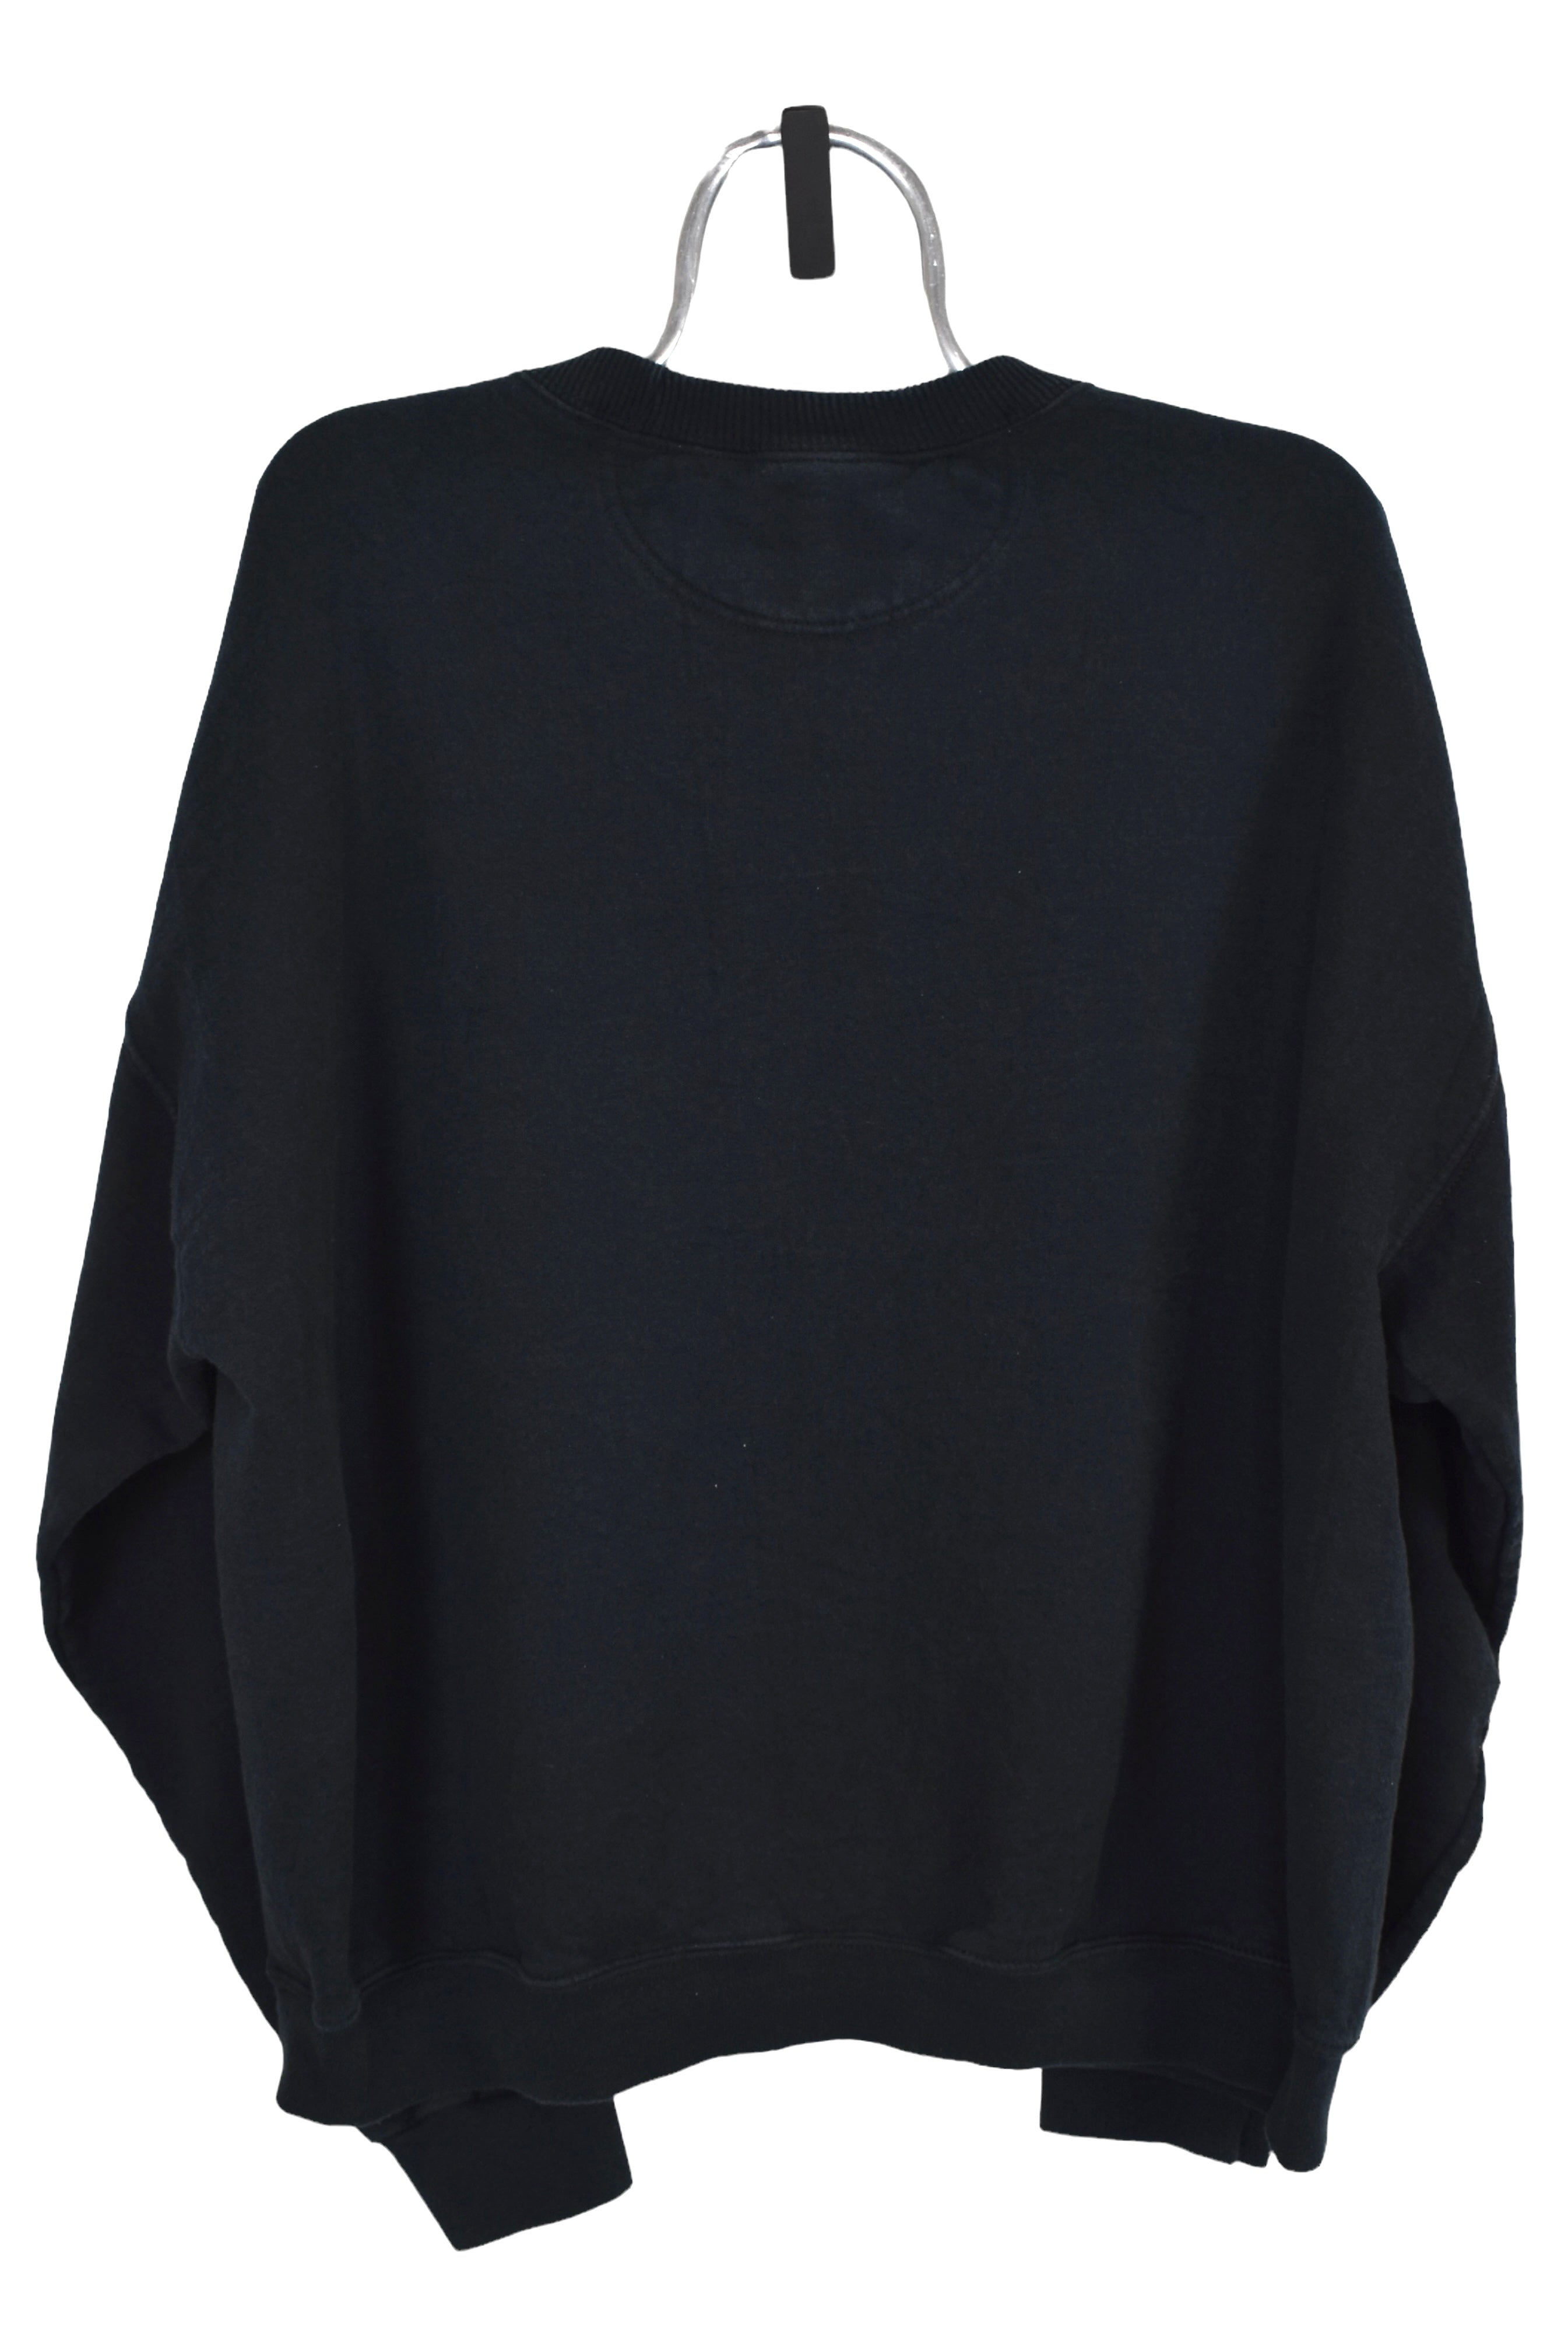 Vintage Starter sweatshirt (XL), black embroidered crewneck